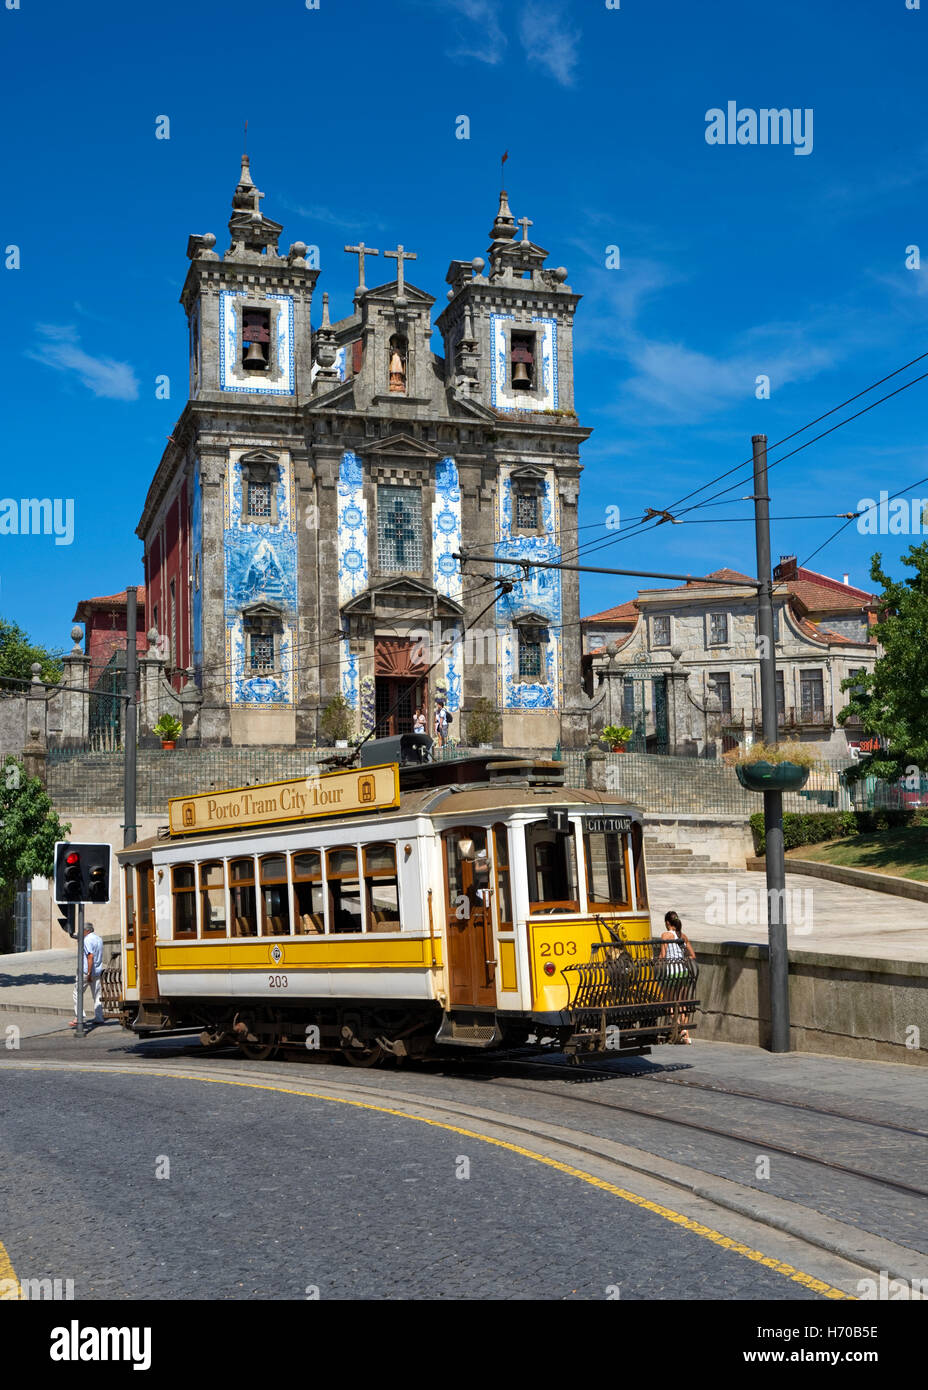 Portugal, Porto, Praca da Batalha, a sightseeing tram outside Santo Ildefonso church Stock Photo